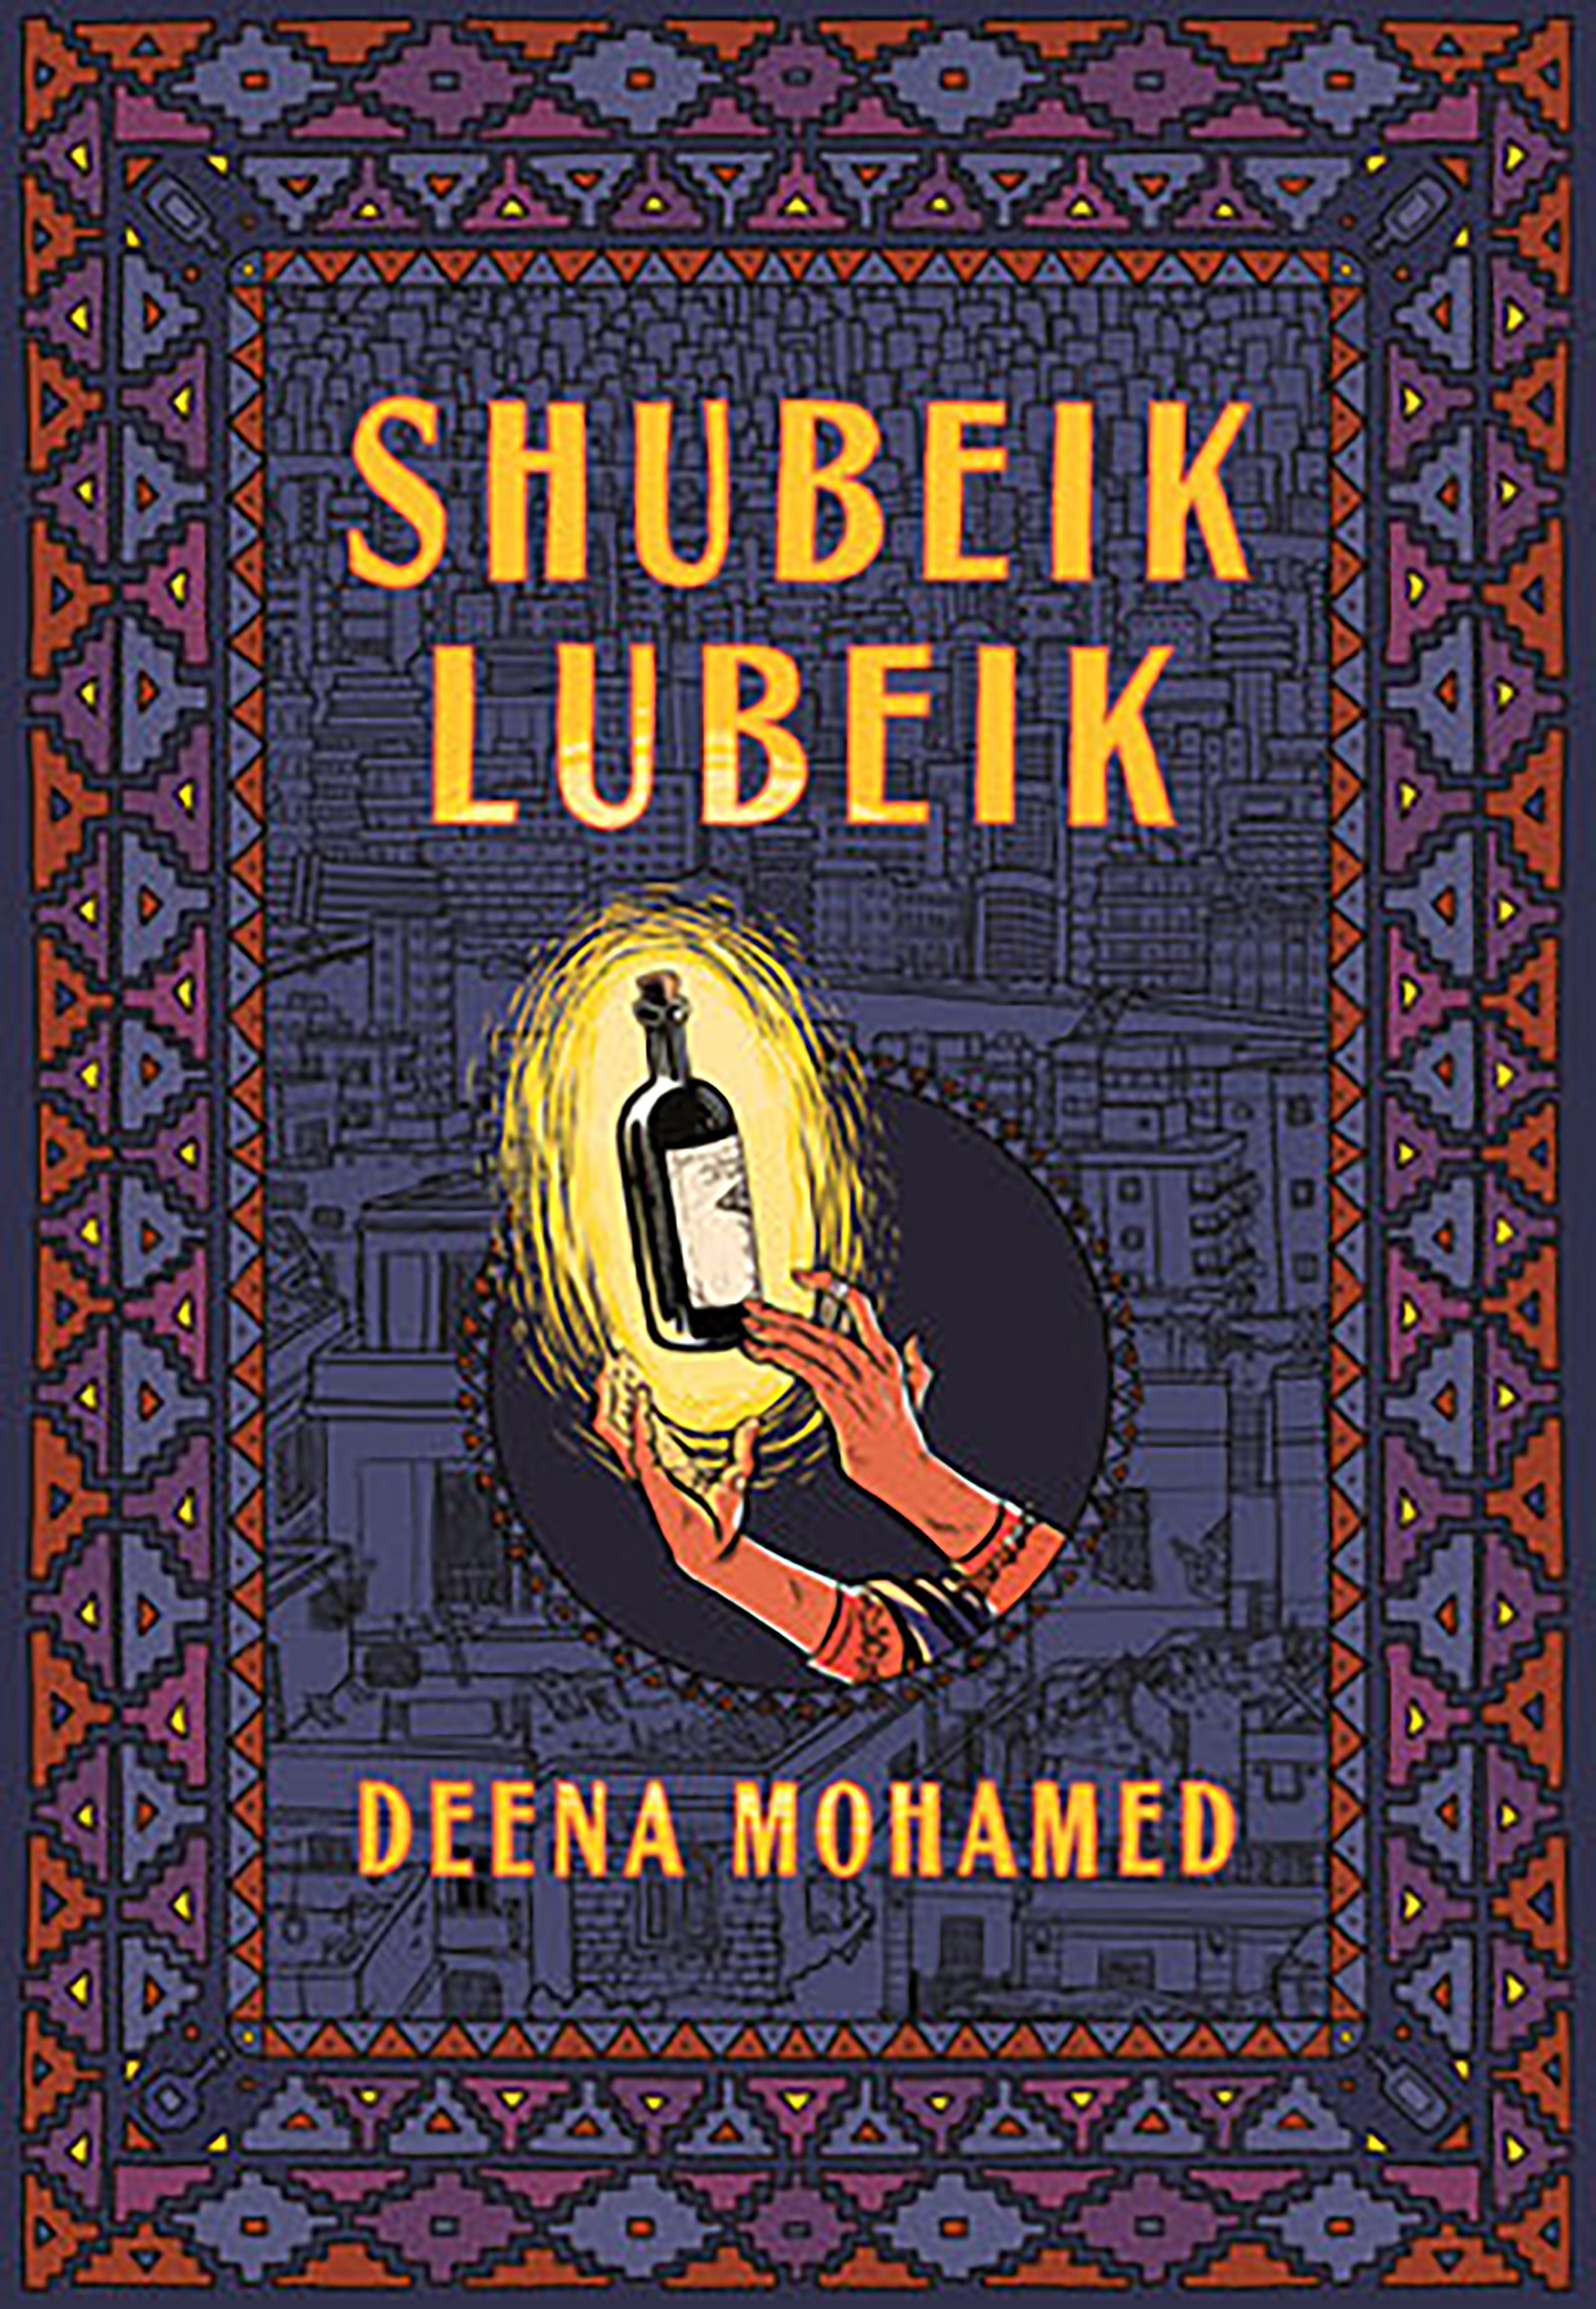 Book cover: "Shubeik Lubeik."